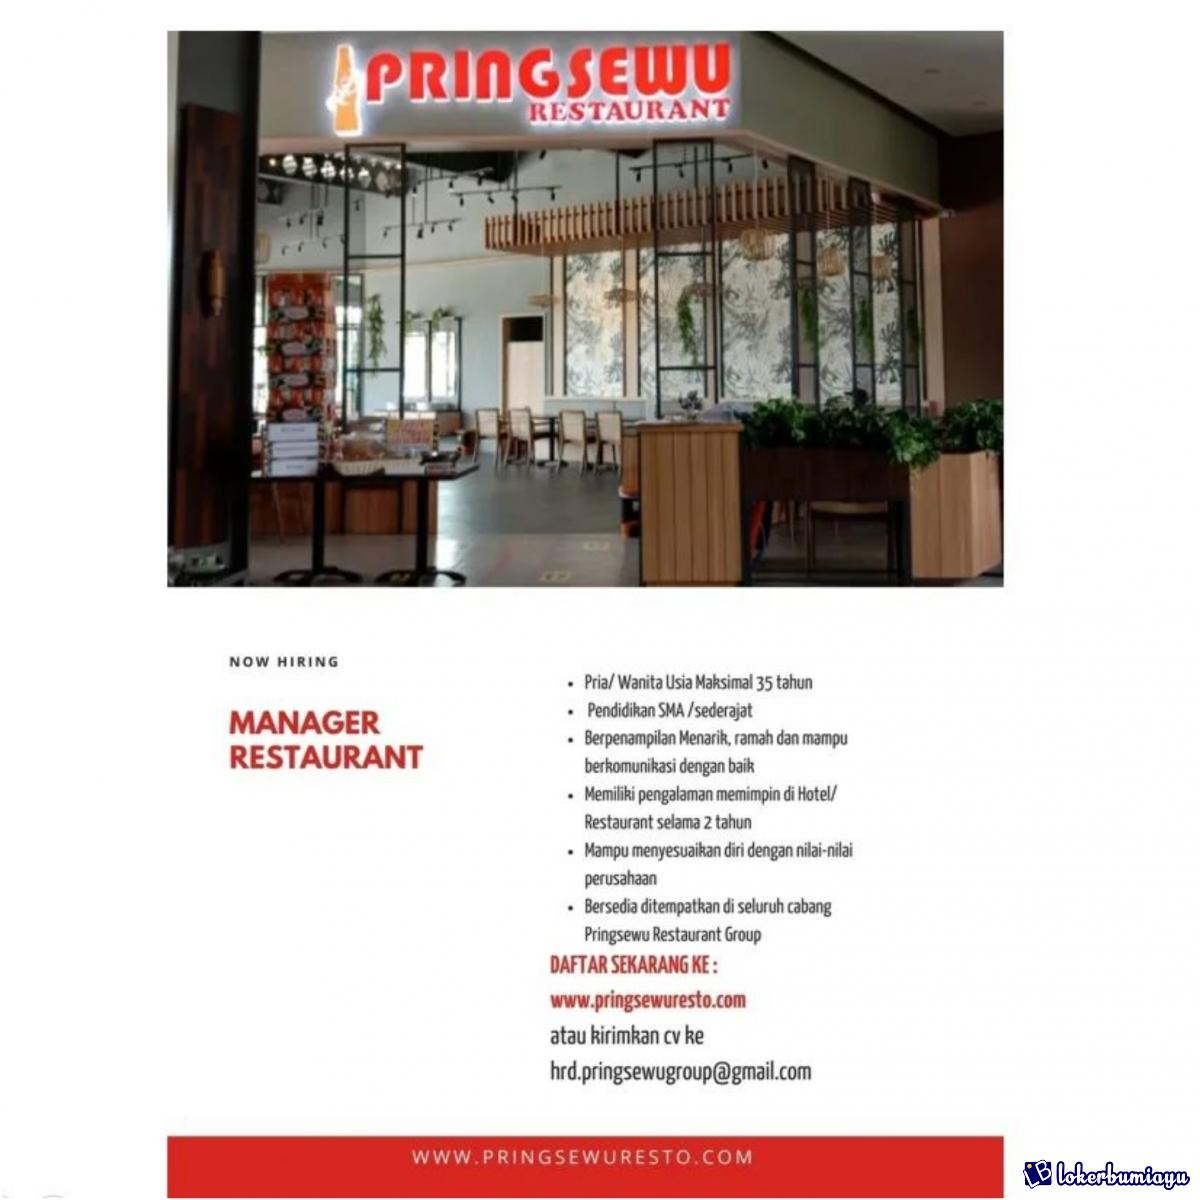 Pringsewu Restaurant Group